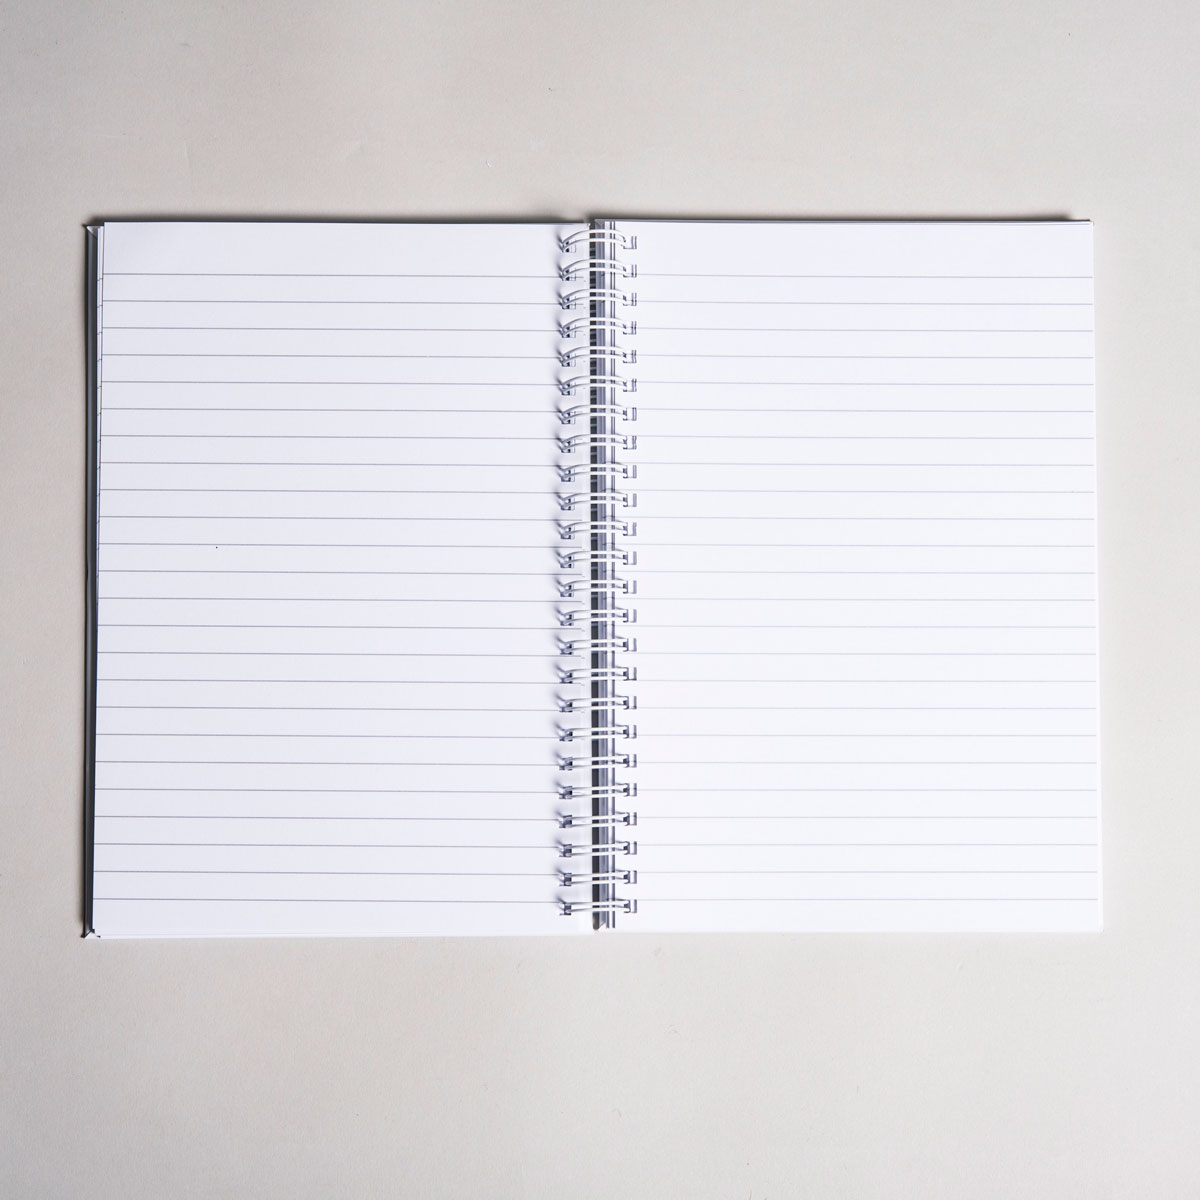 Personalised Notebook - Hit List